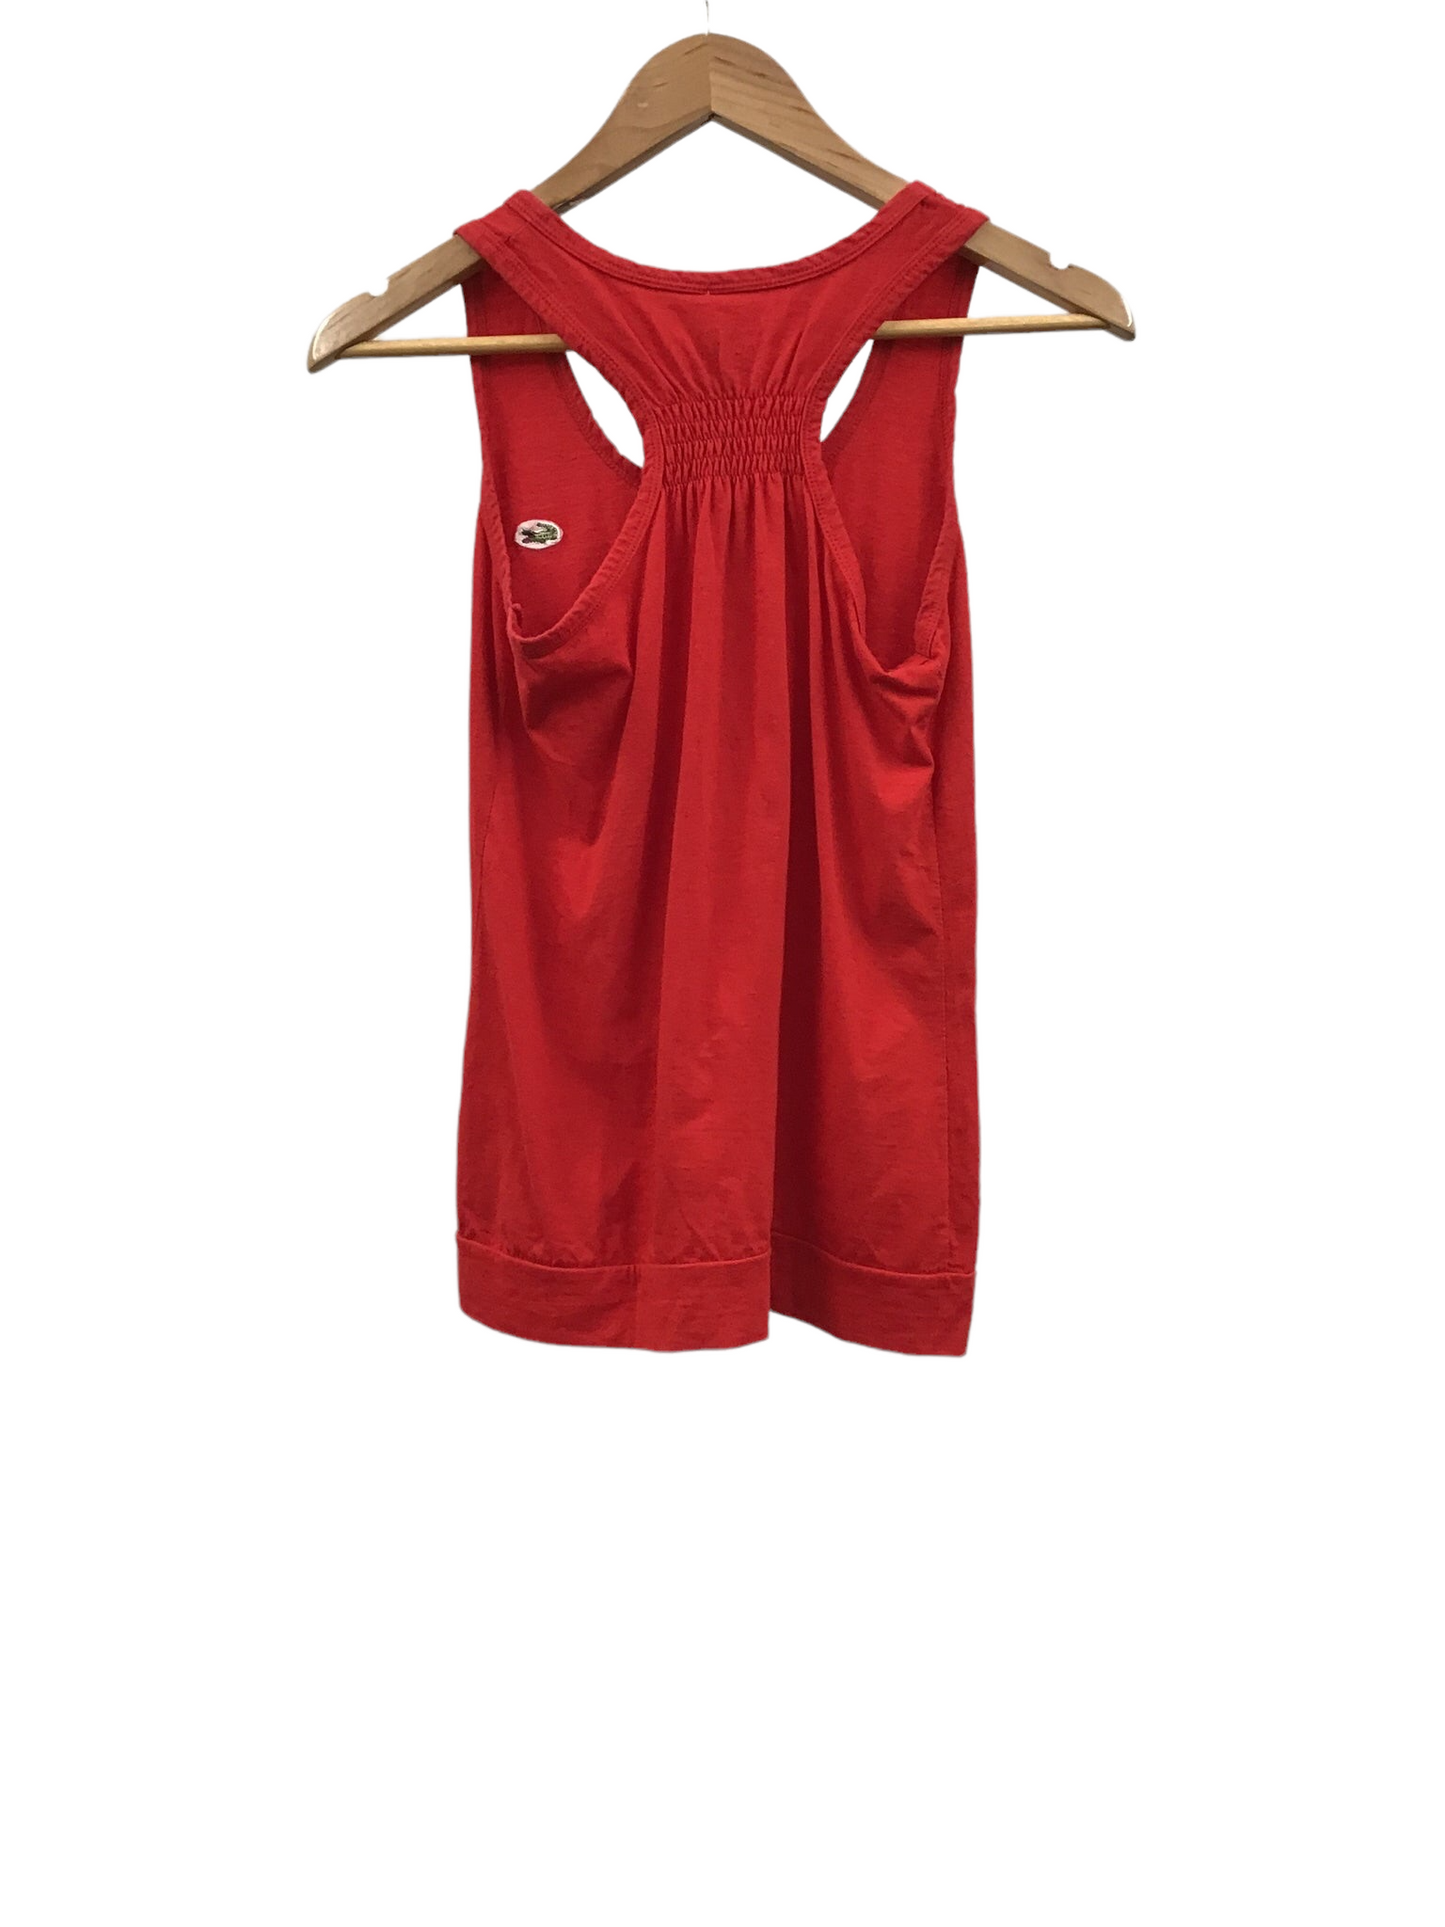 Lacoste Sports Vest (Women's Size S)